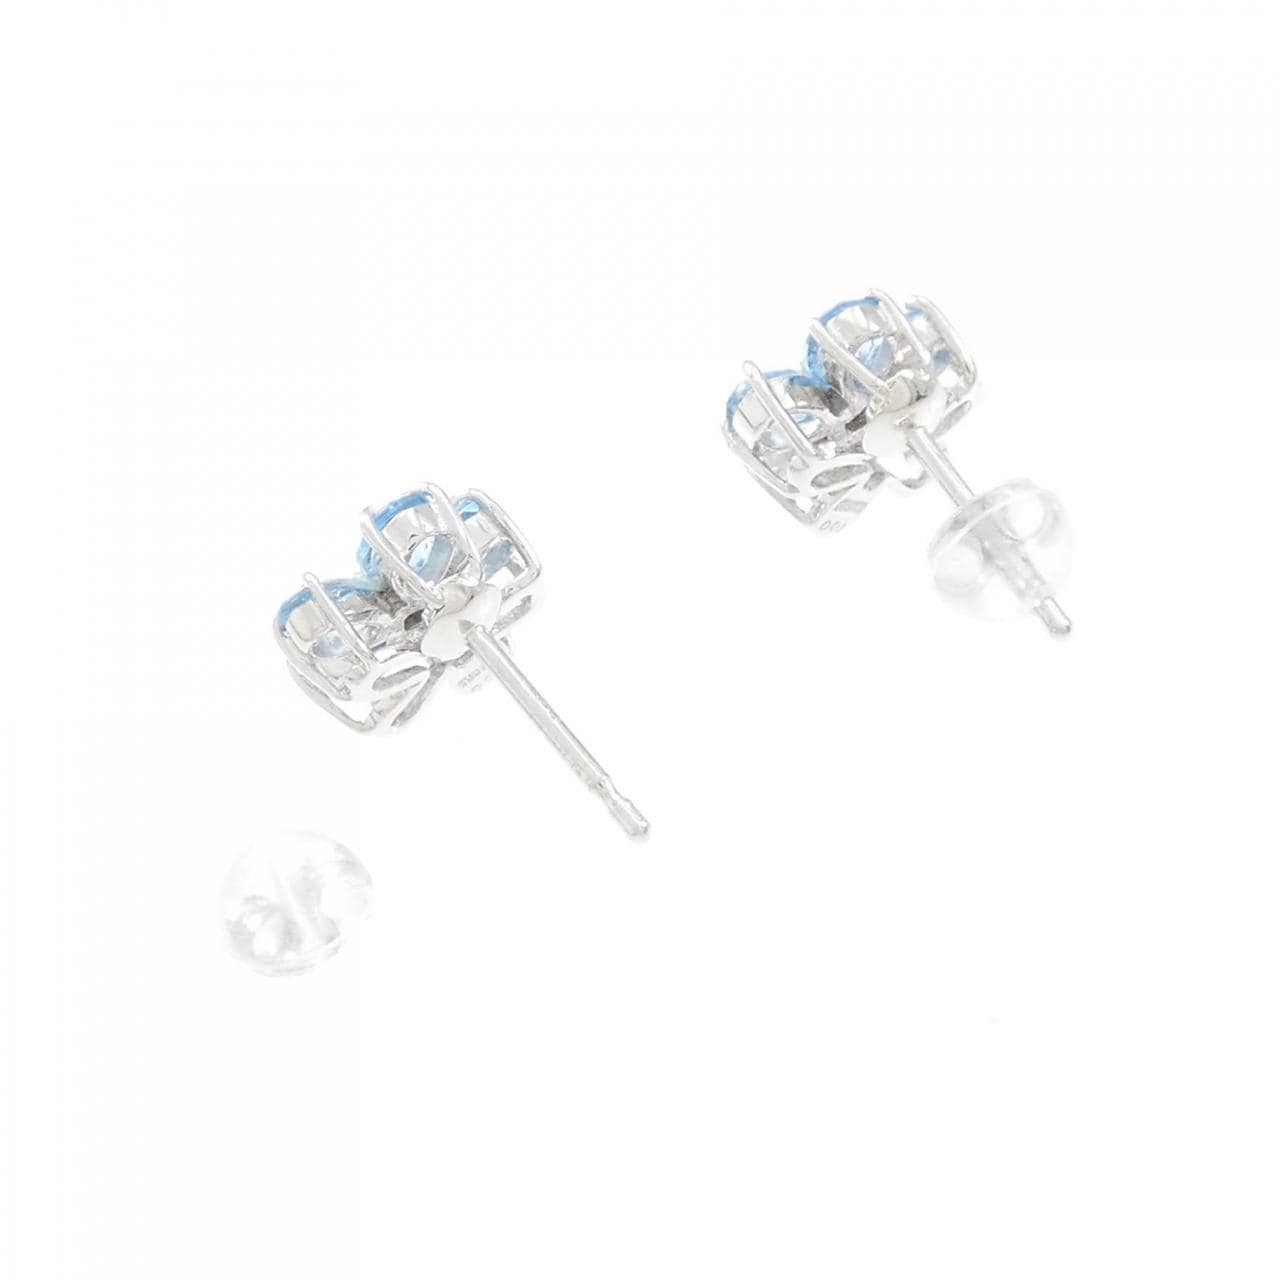 K18WG/K14WG flower blue Topaz earrings